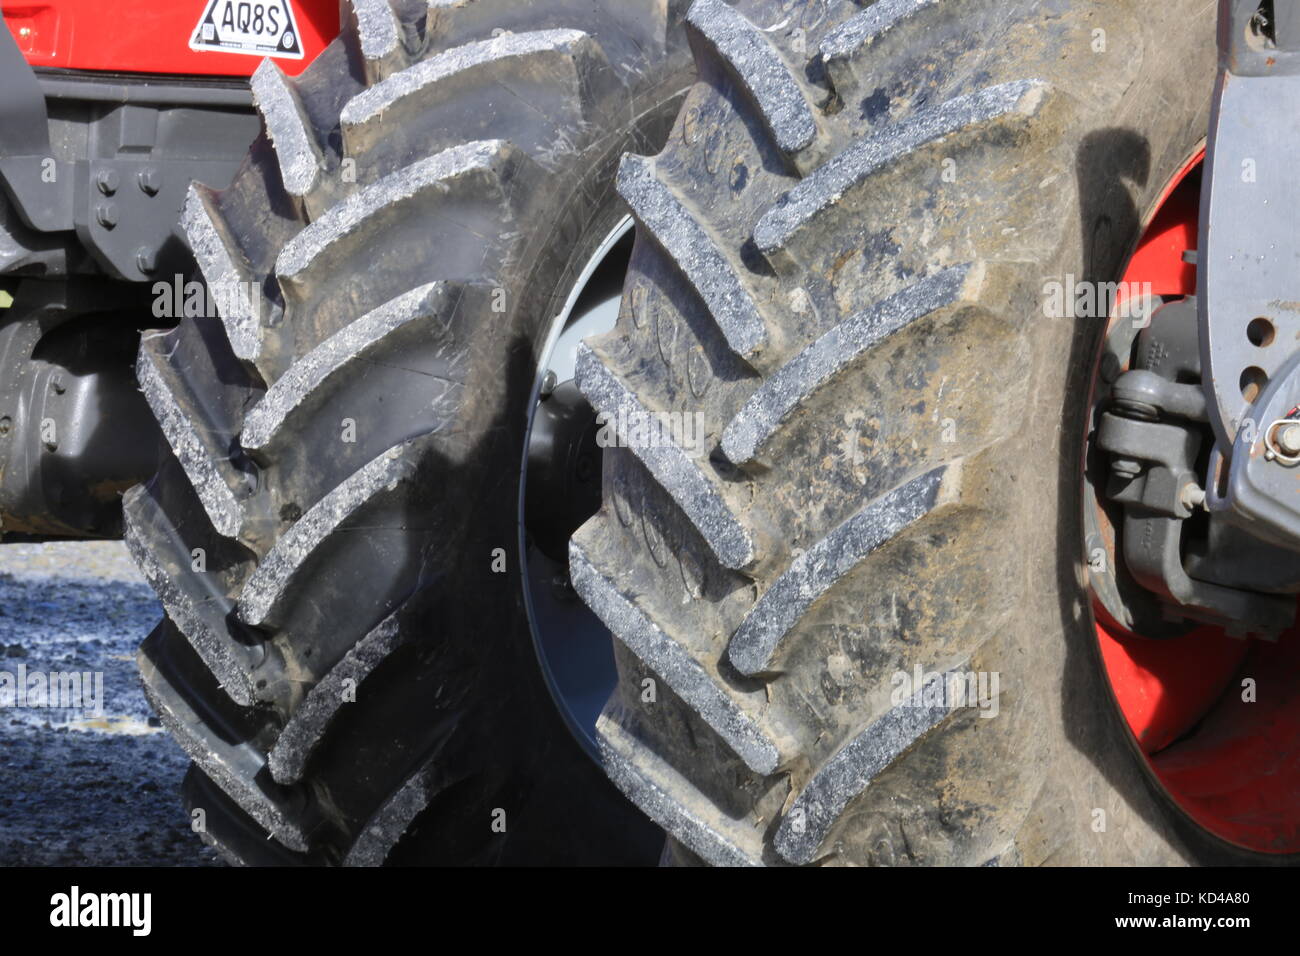 Tractor tyres in Kerry, Ireland Stock Photo